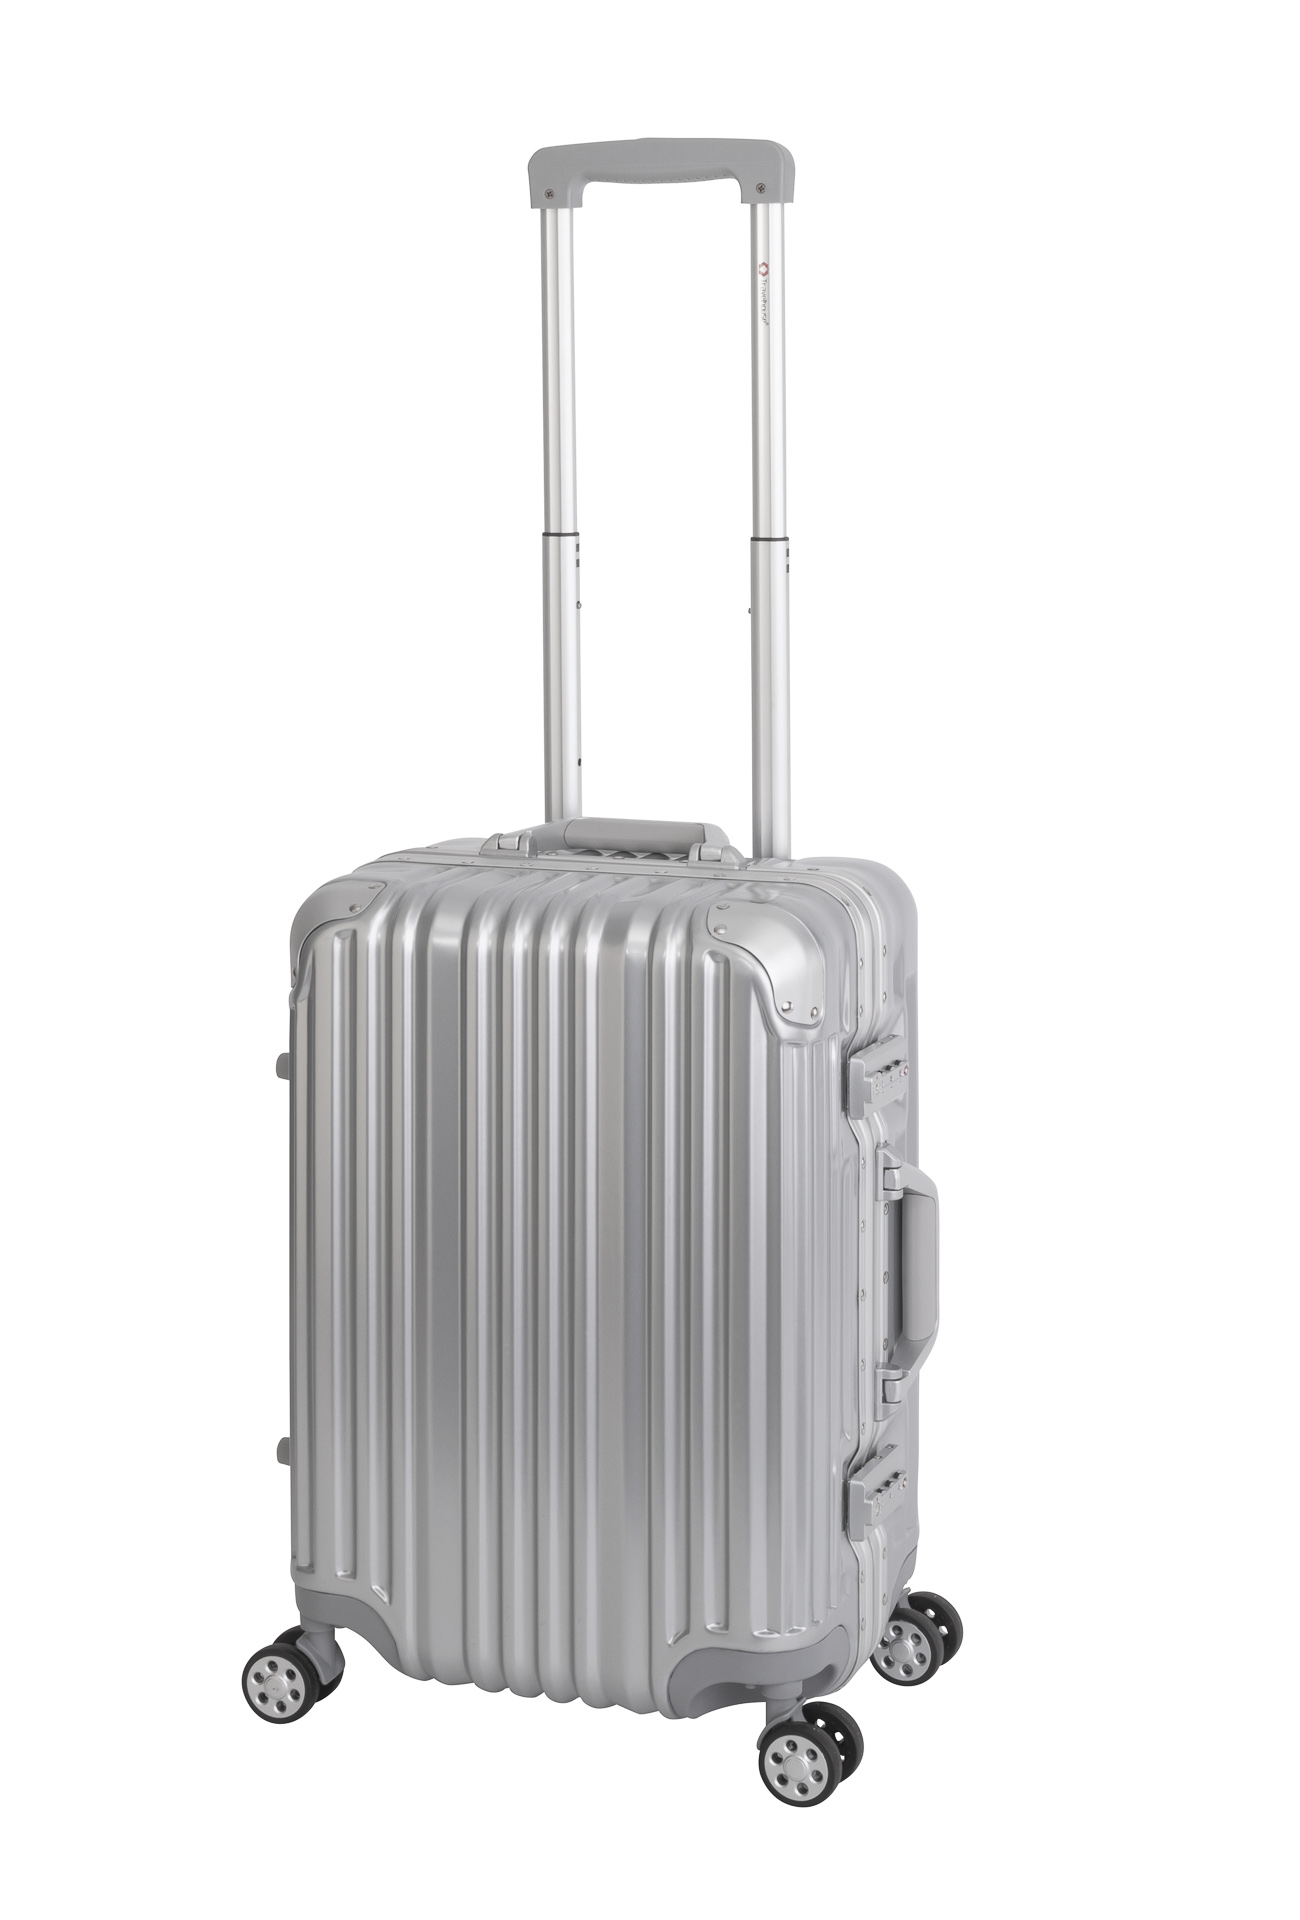 ✈ Travelhouse London Handgepäck Koffer Silber (55x37x23cm) Rollkoffer  online kaufen! Beliebter Bestseller